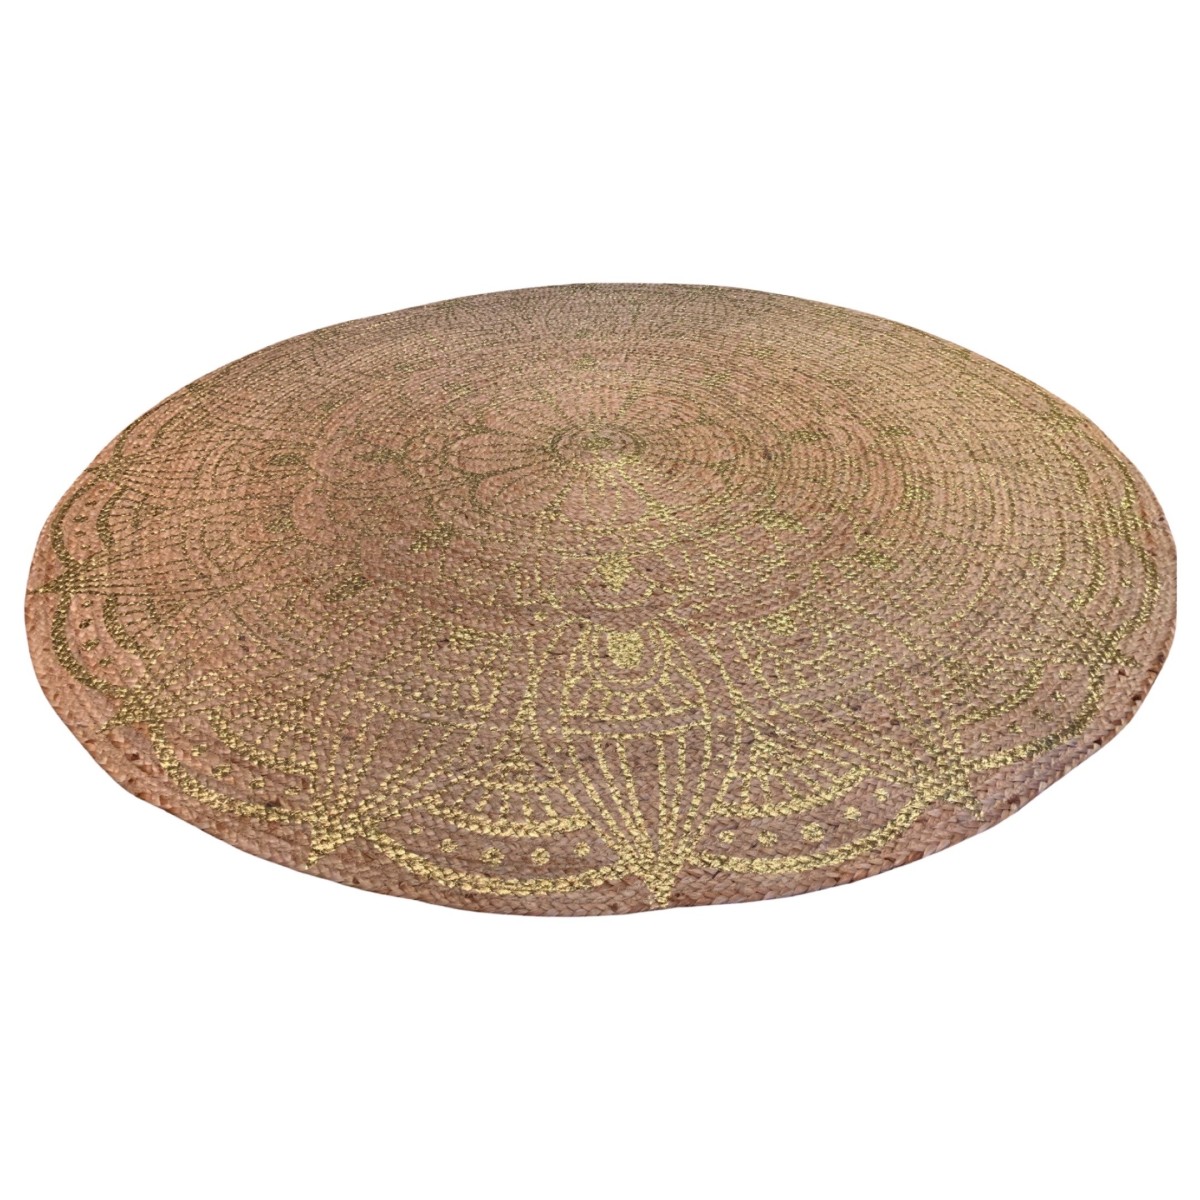 rug jute braided round natural with mandala lotus print 150cm